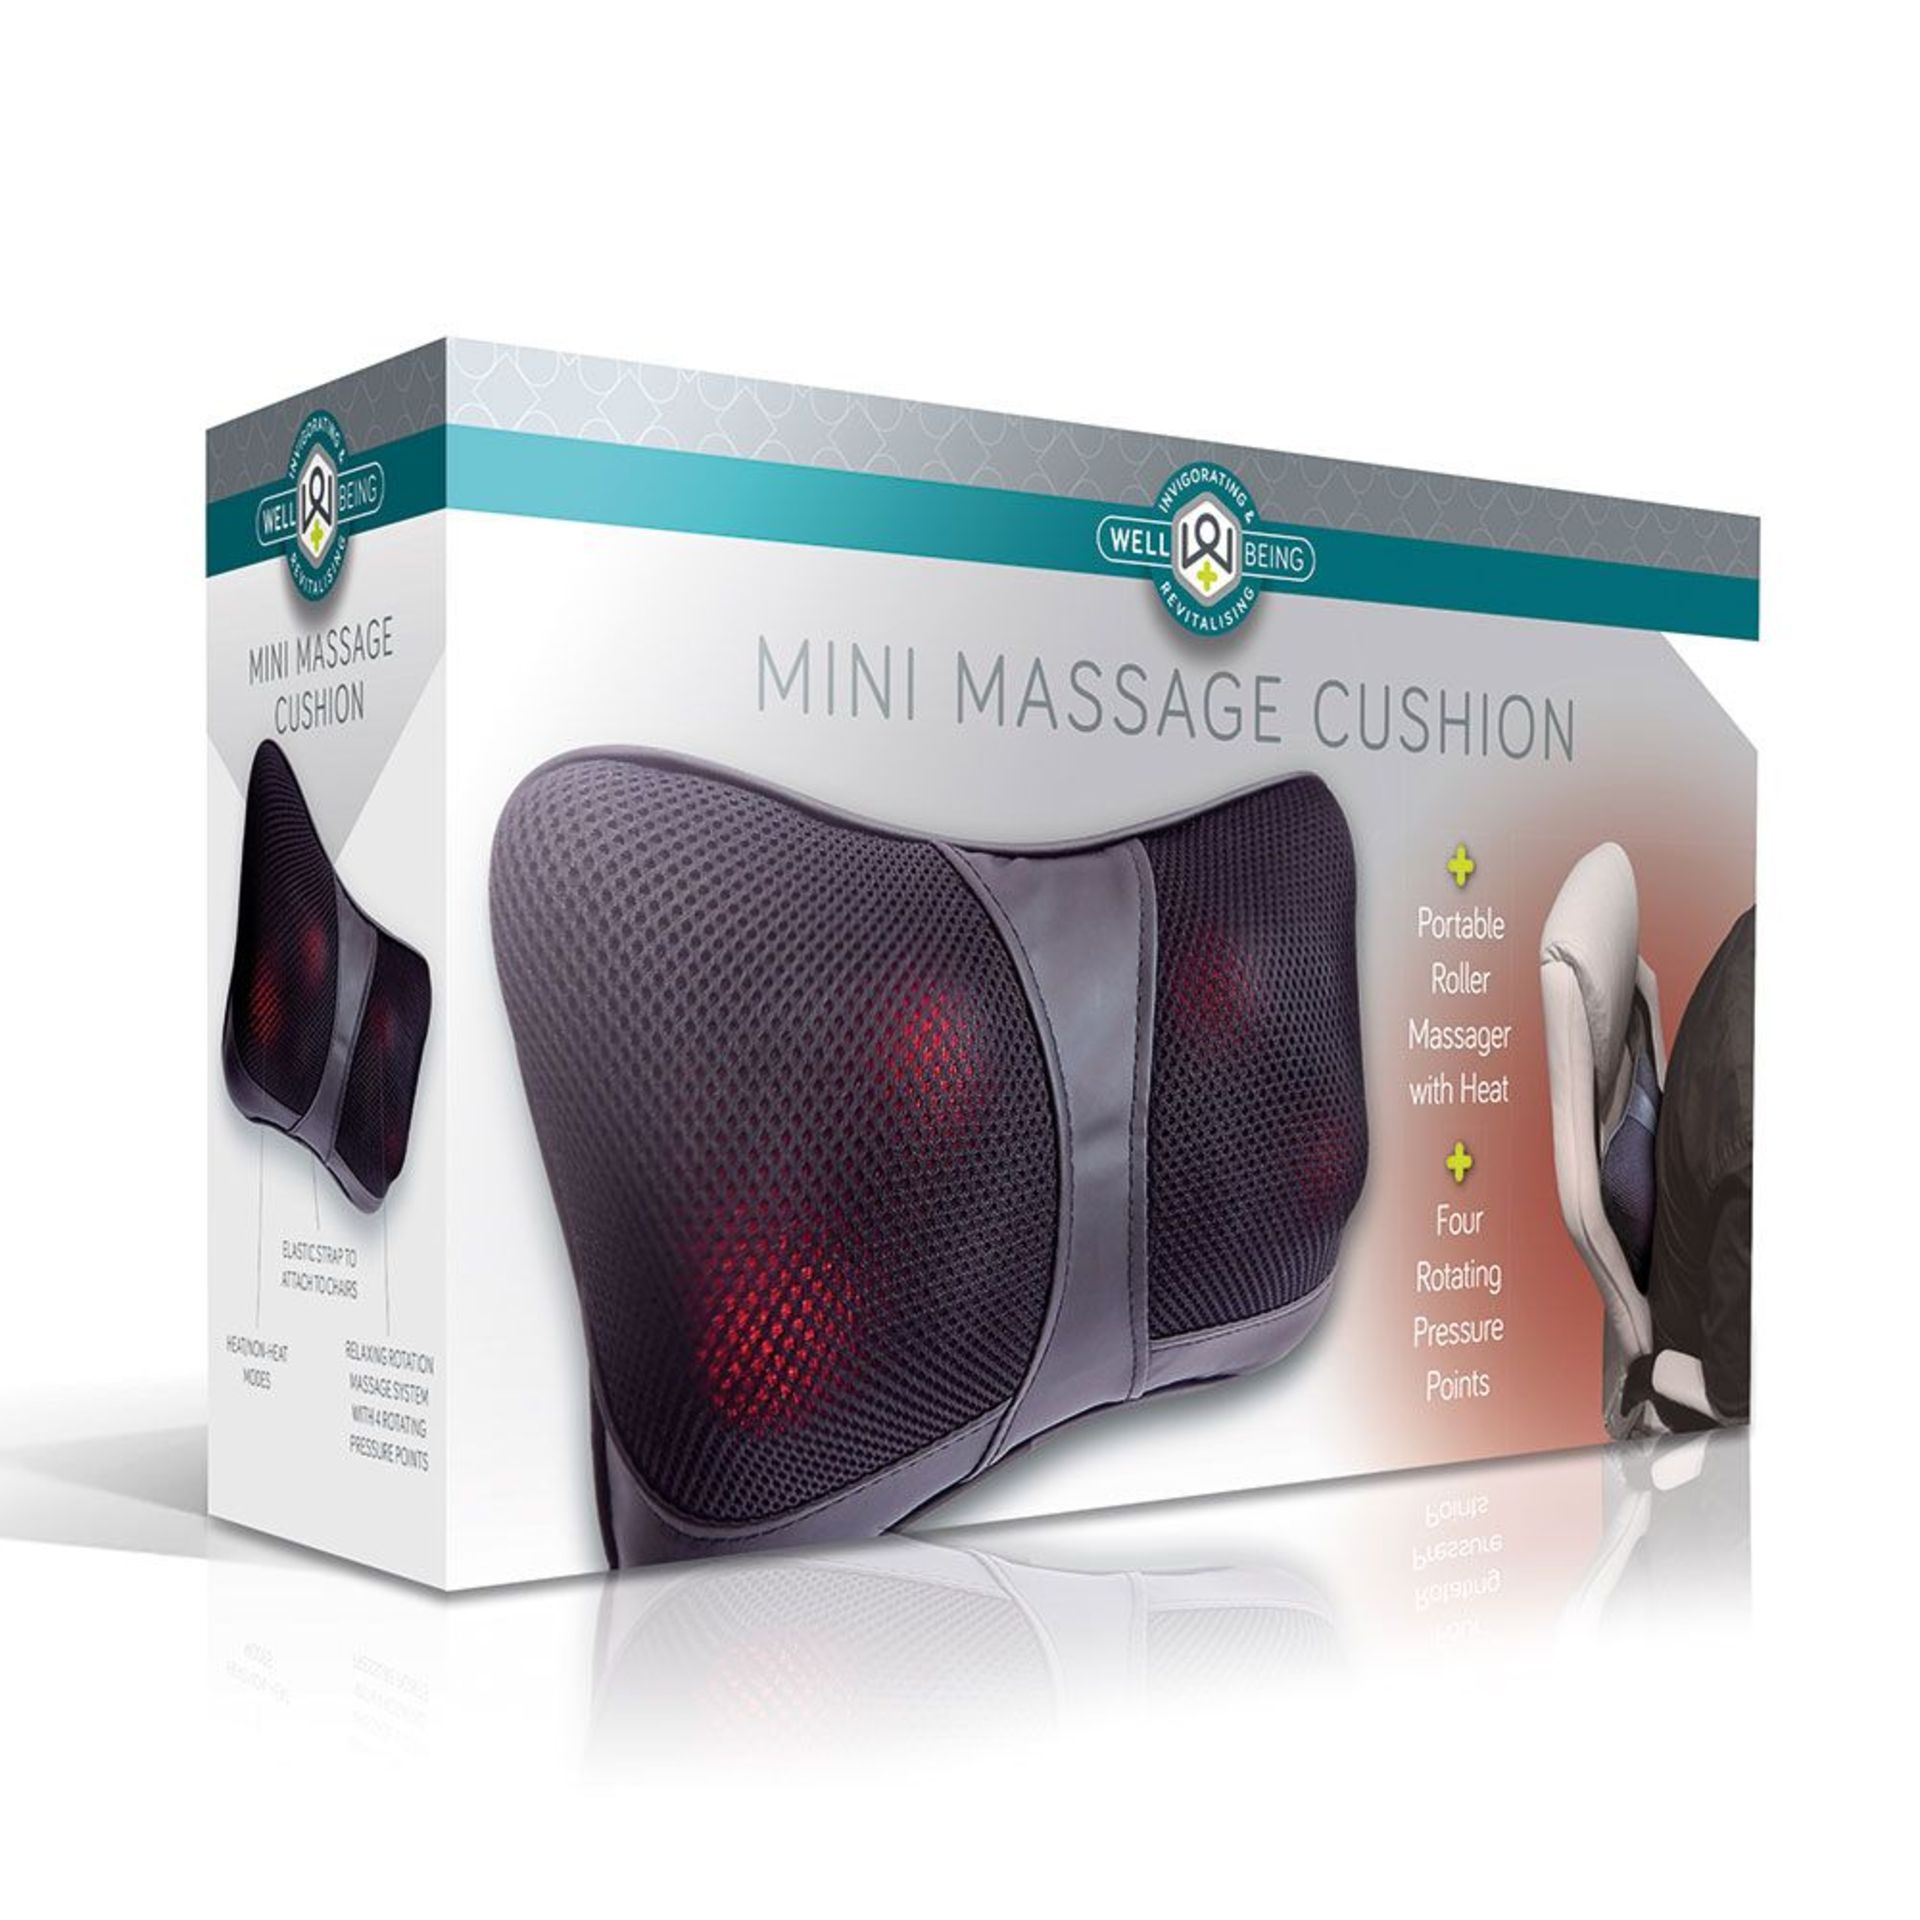 (R15) 5x Massage Items. 3x Well Being Mini Massage Cushion. 1x Well Being Full Body Massager Mat. 1